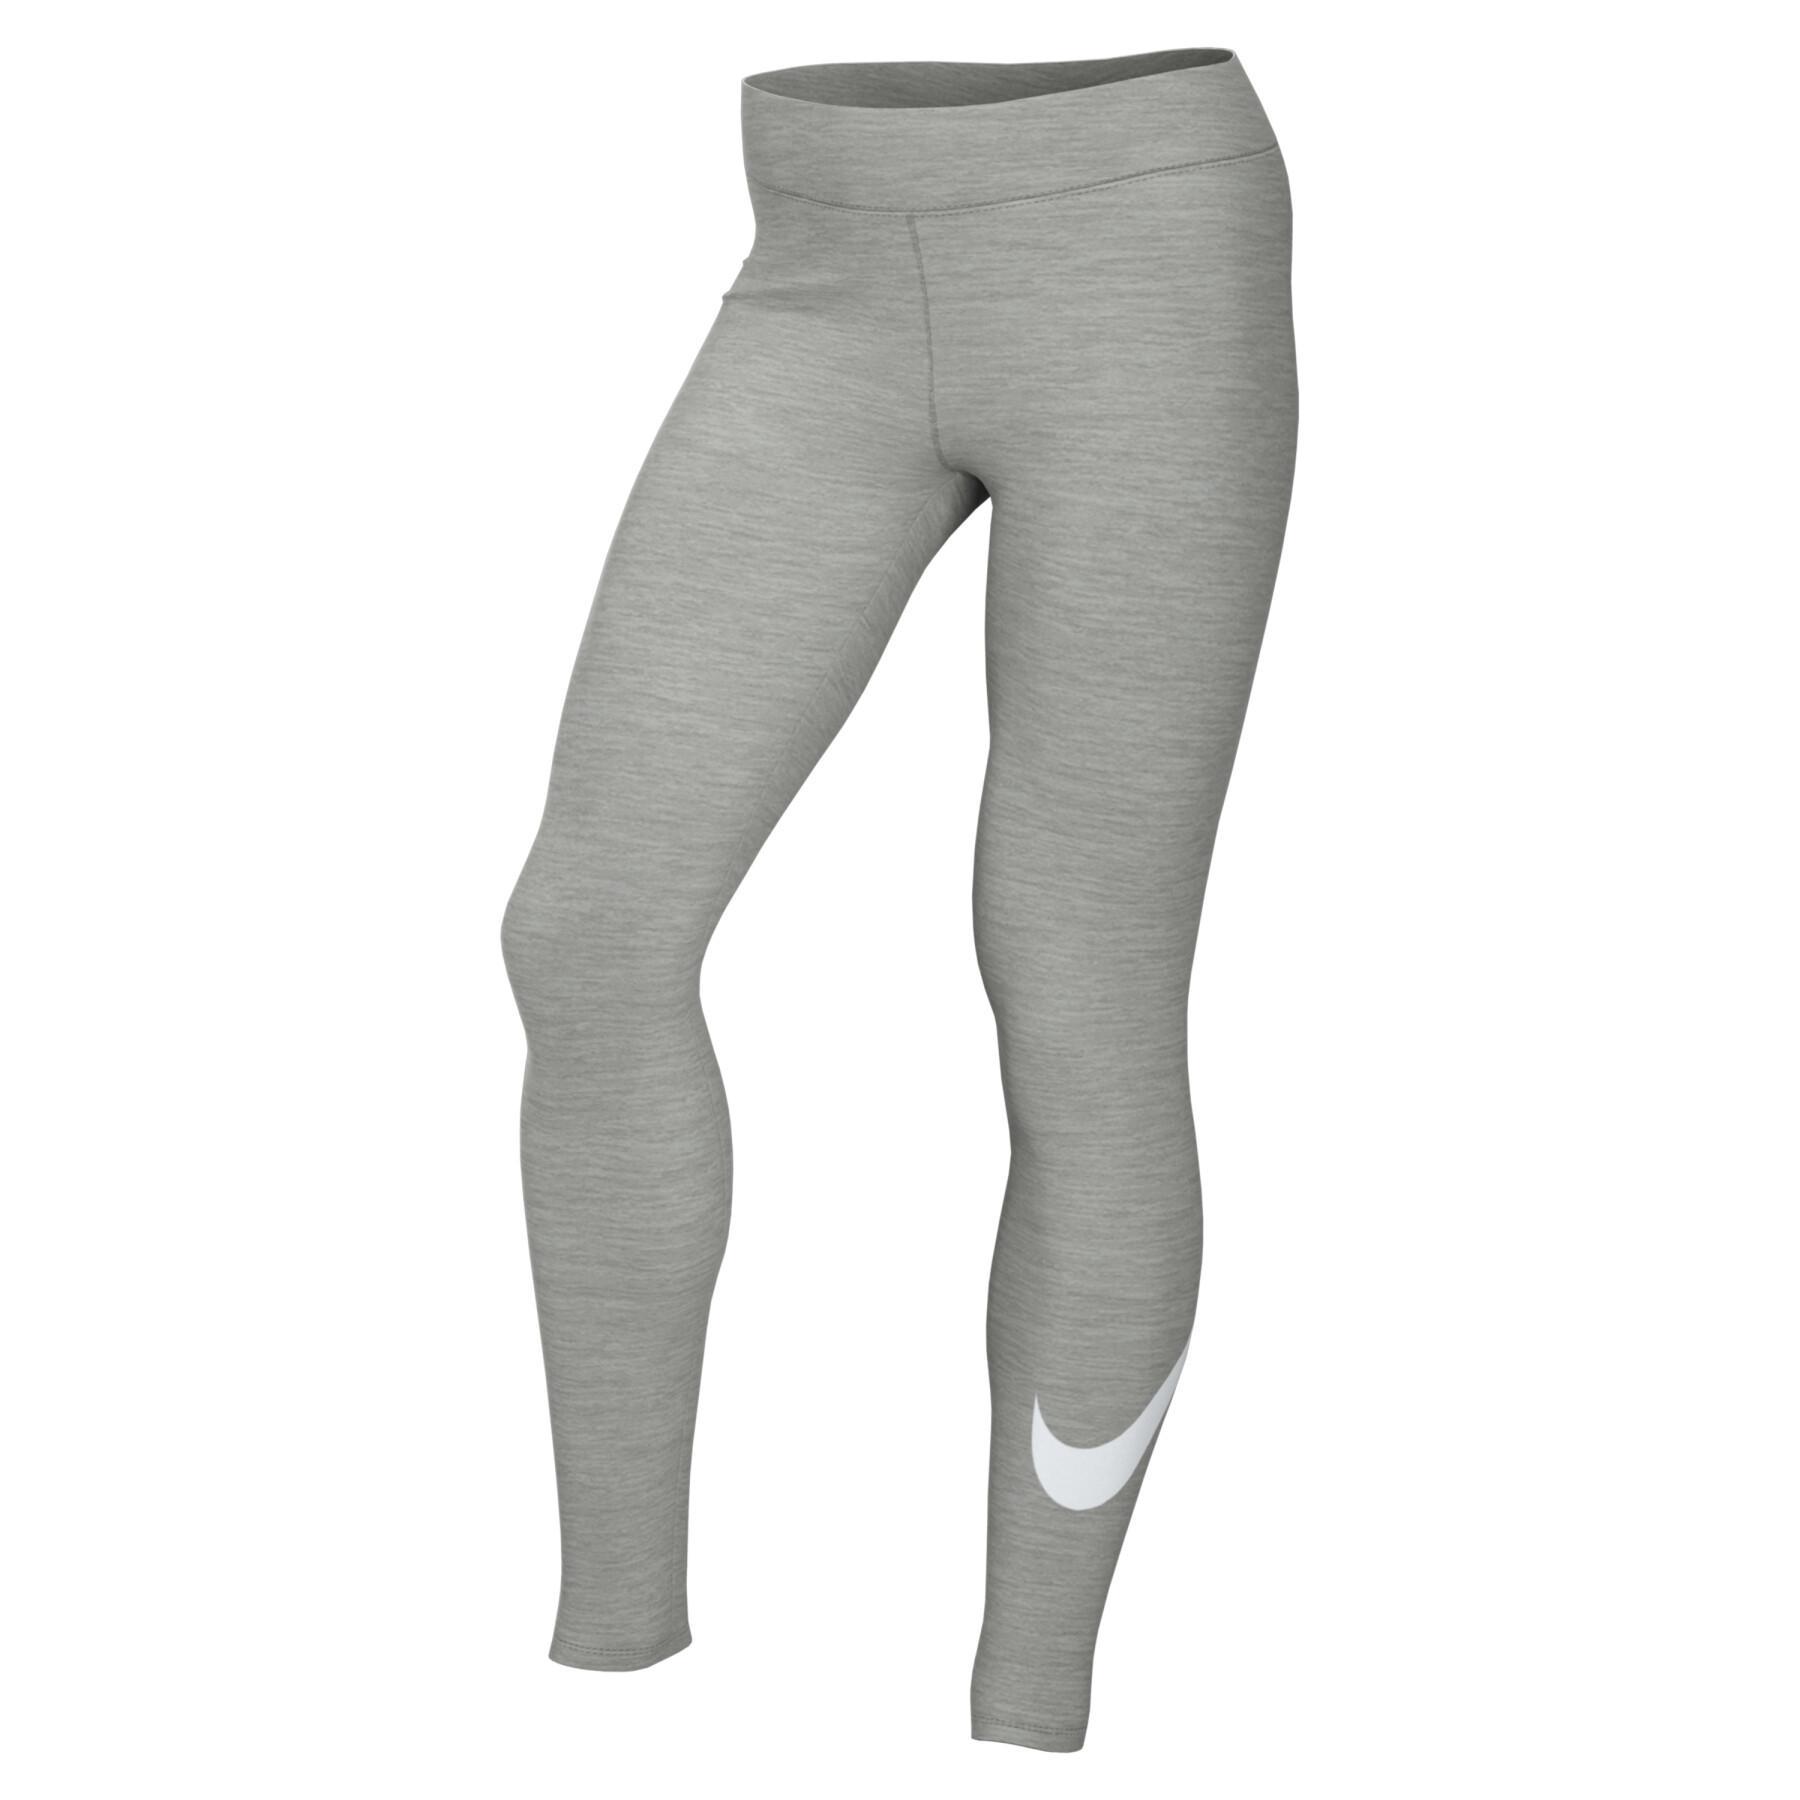 Legging woman Nike Sportswear Essential - Nike - Brands - Handball wear